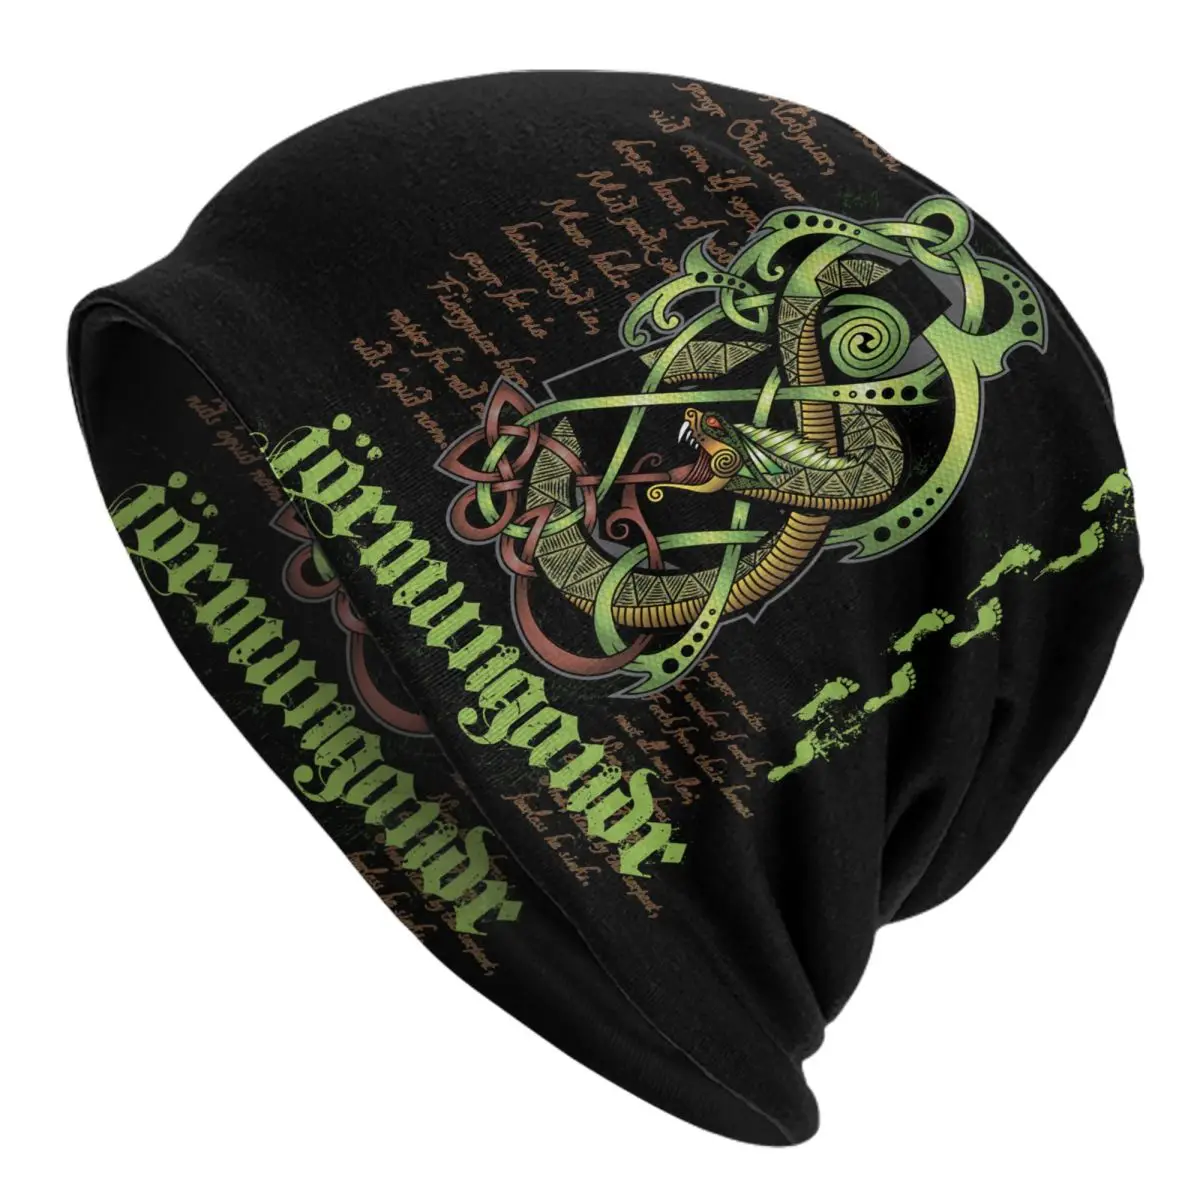 Jormungandr,The Earth Serpent Adult Knit Hat Men's Women's Keep warm winter knitted hat